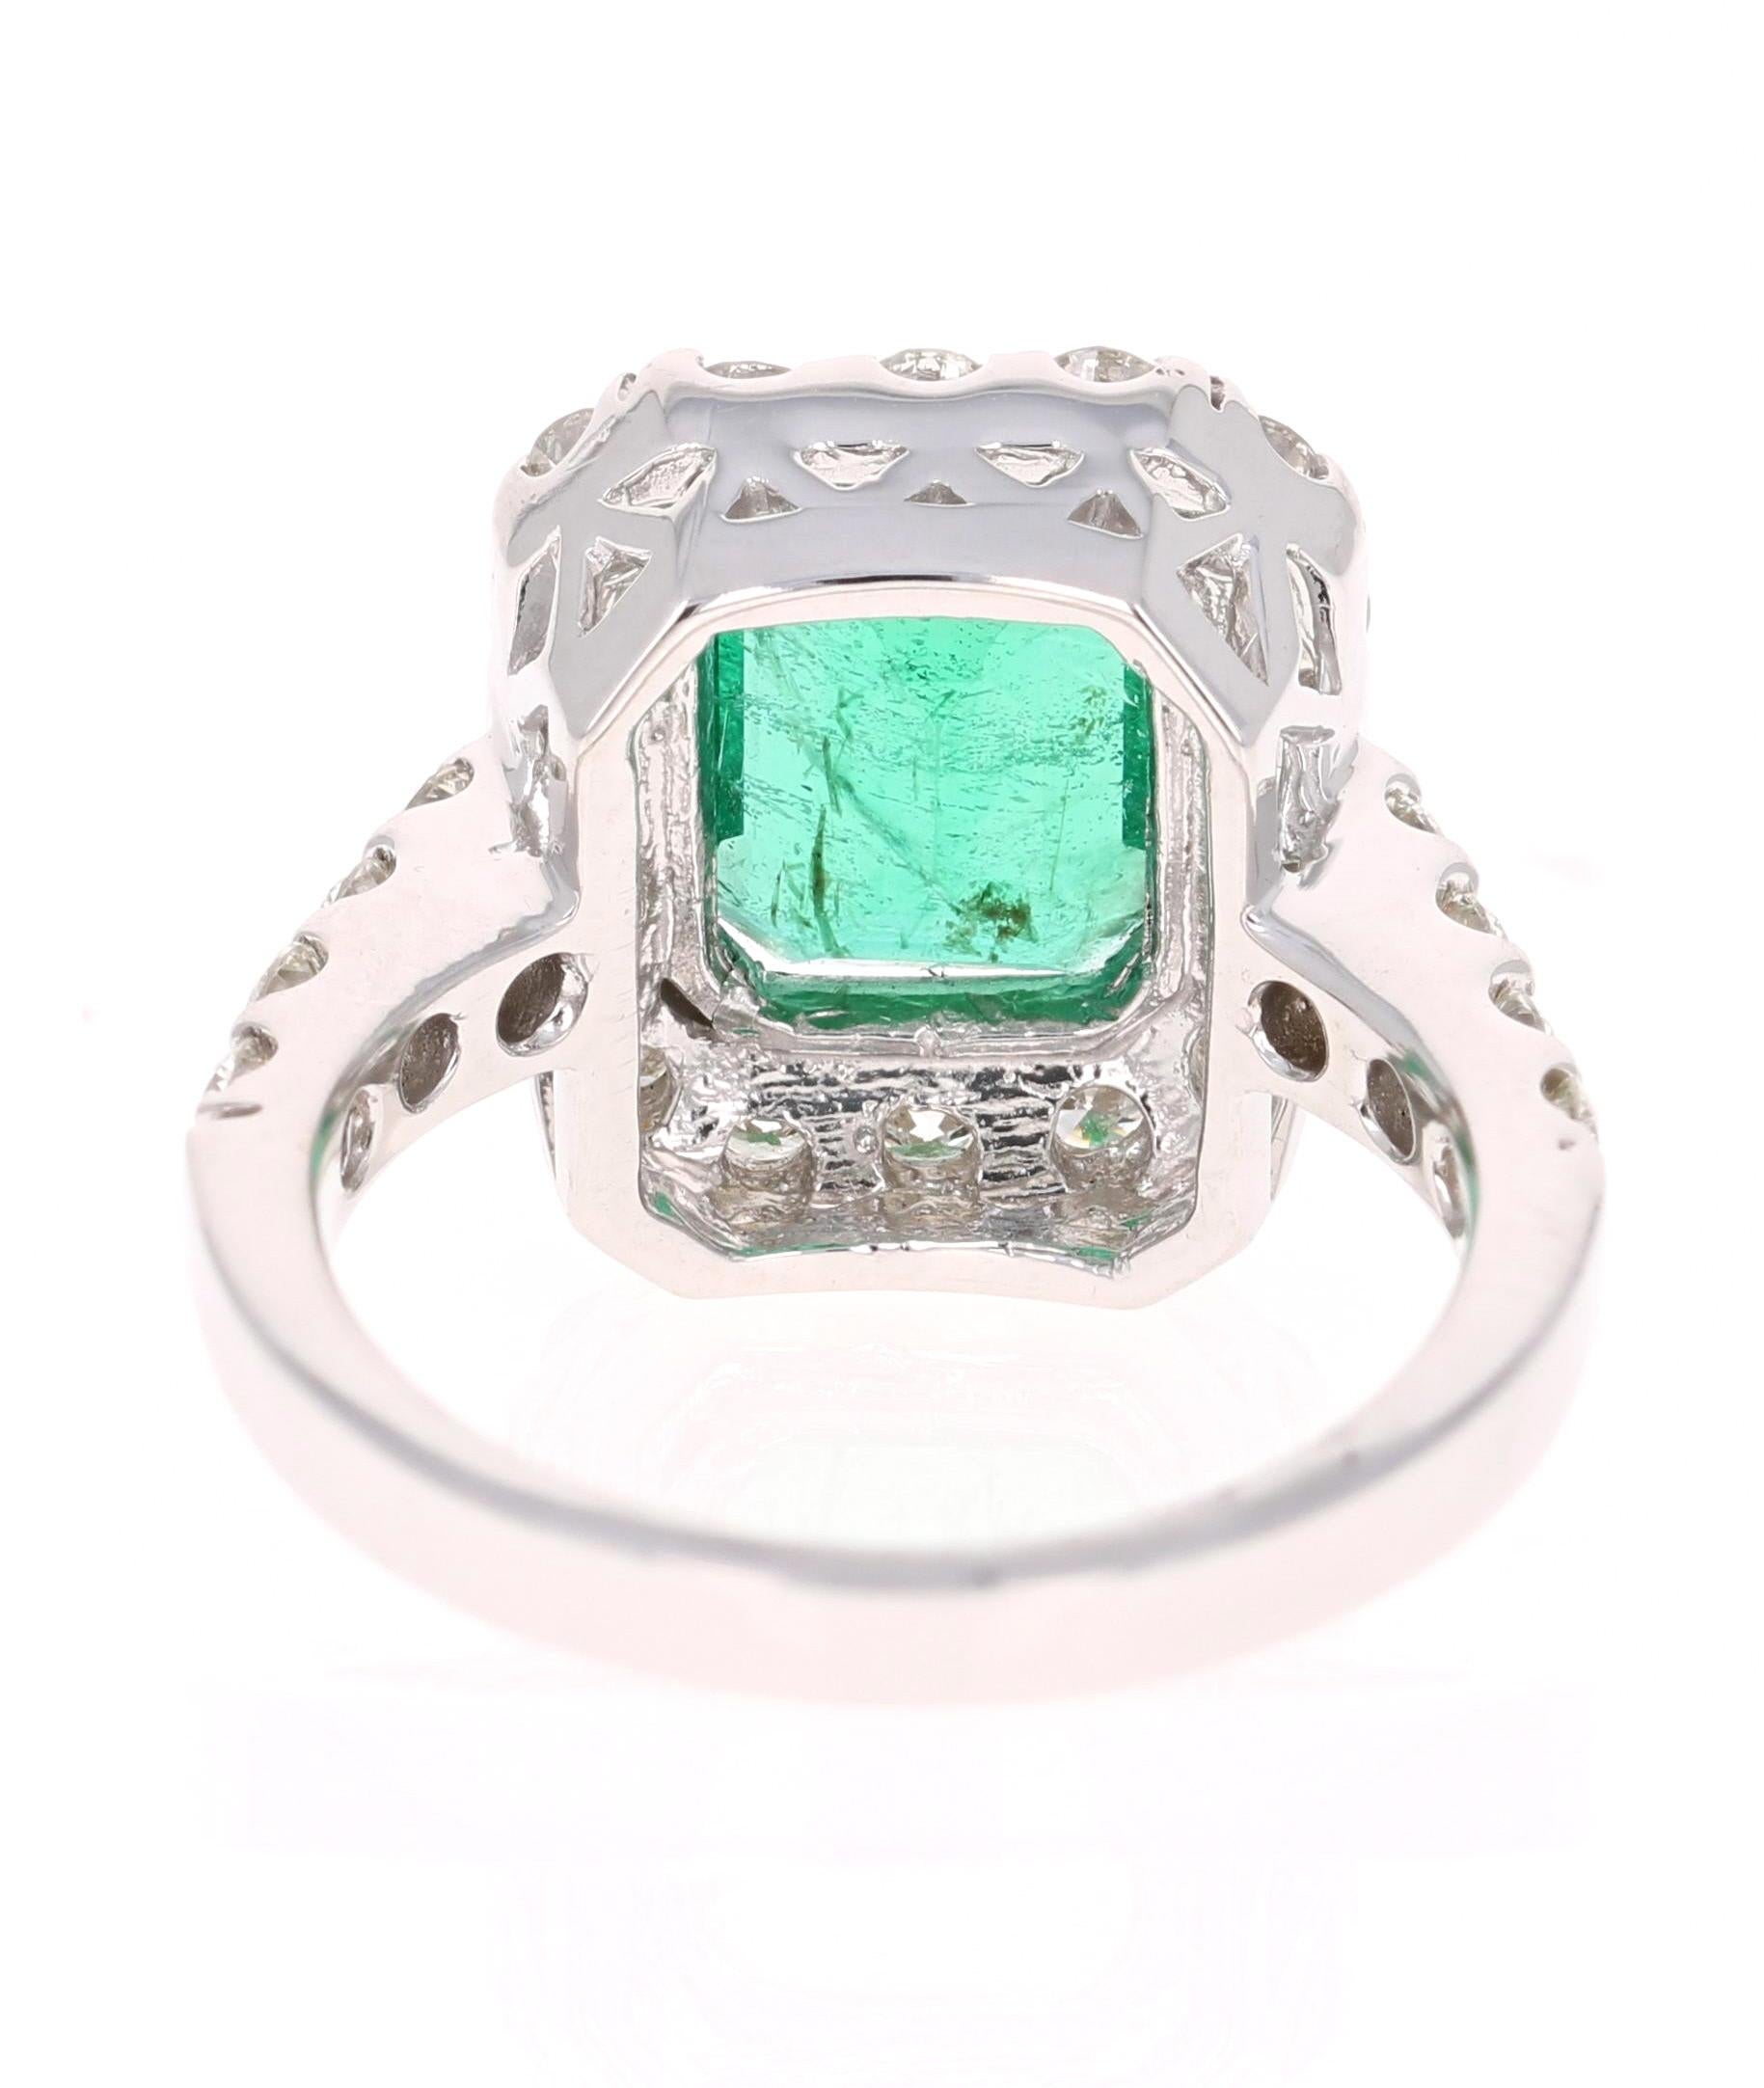 Emerald Cut 4.42 Carat Emerald Diamond White Gold Engagement Ring